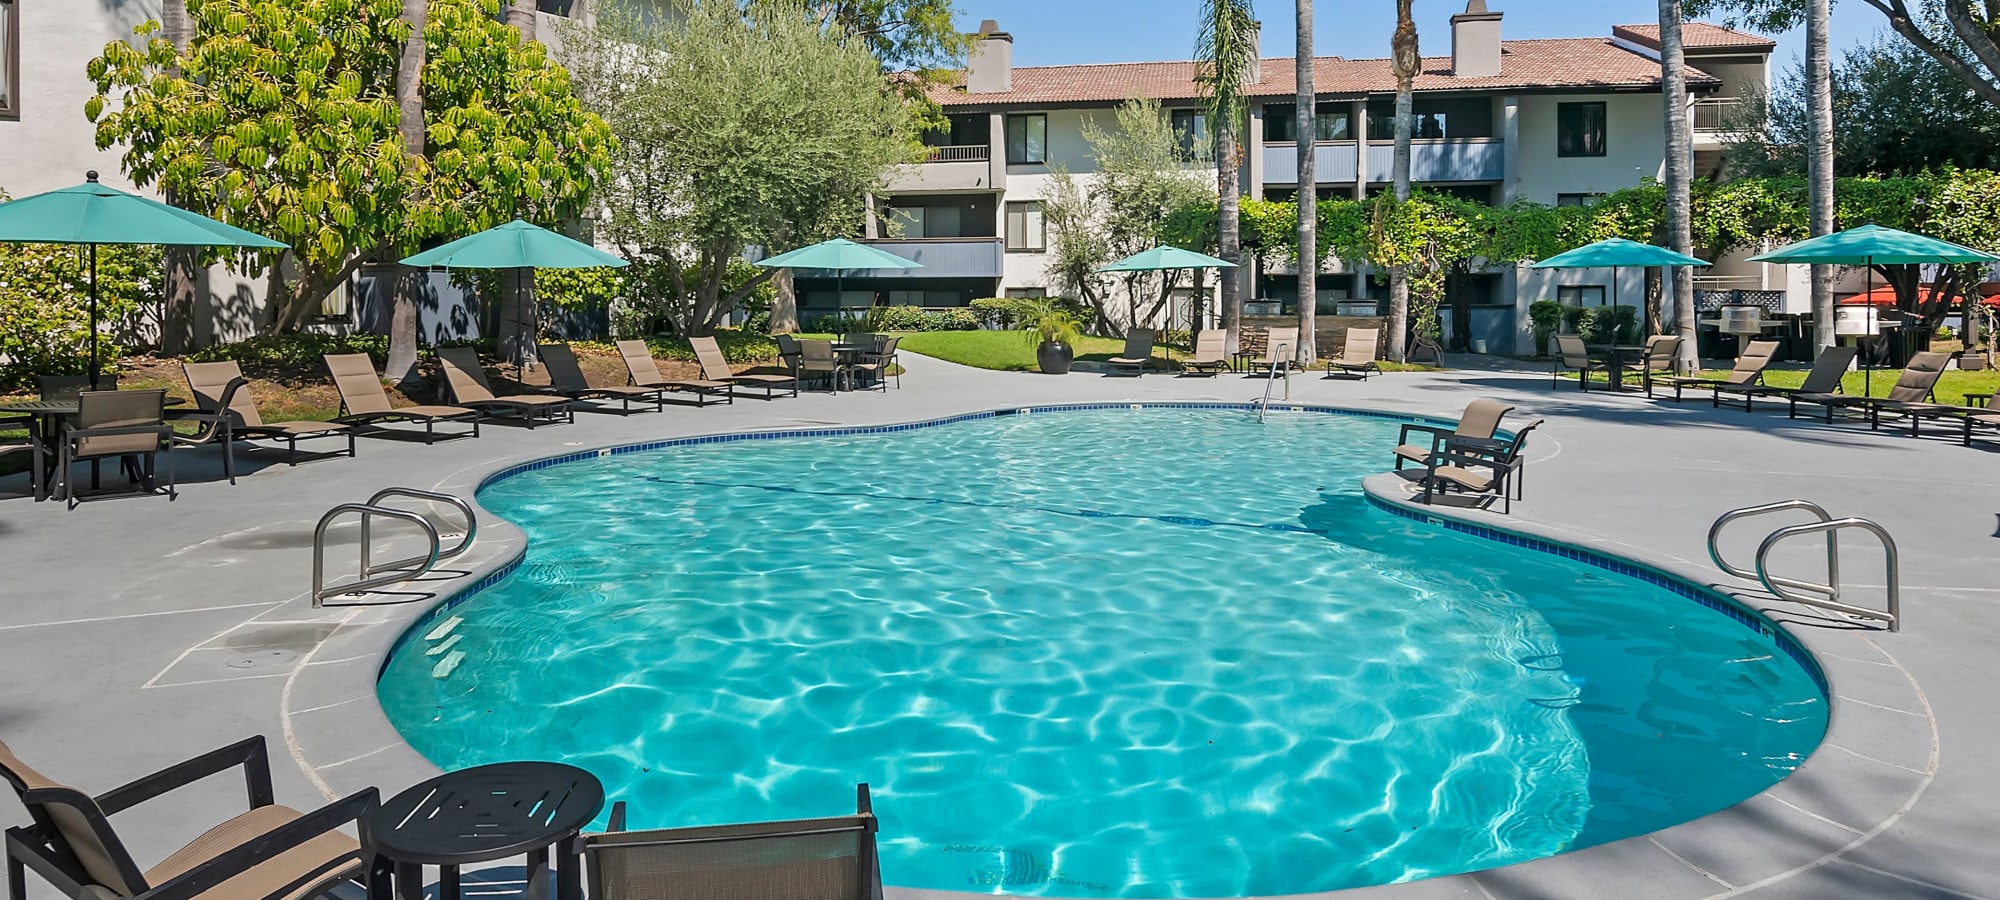 Resort-style pool at Alura, Woodland Hills, California